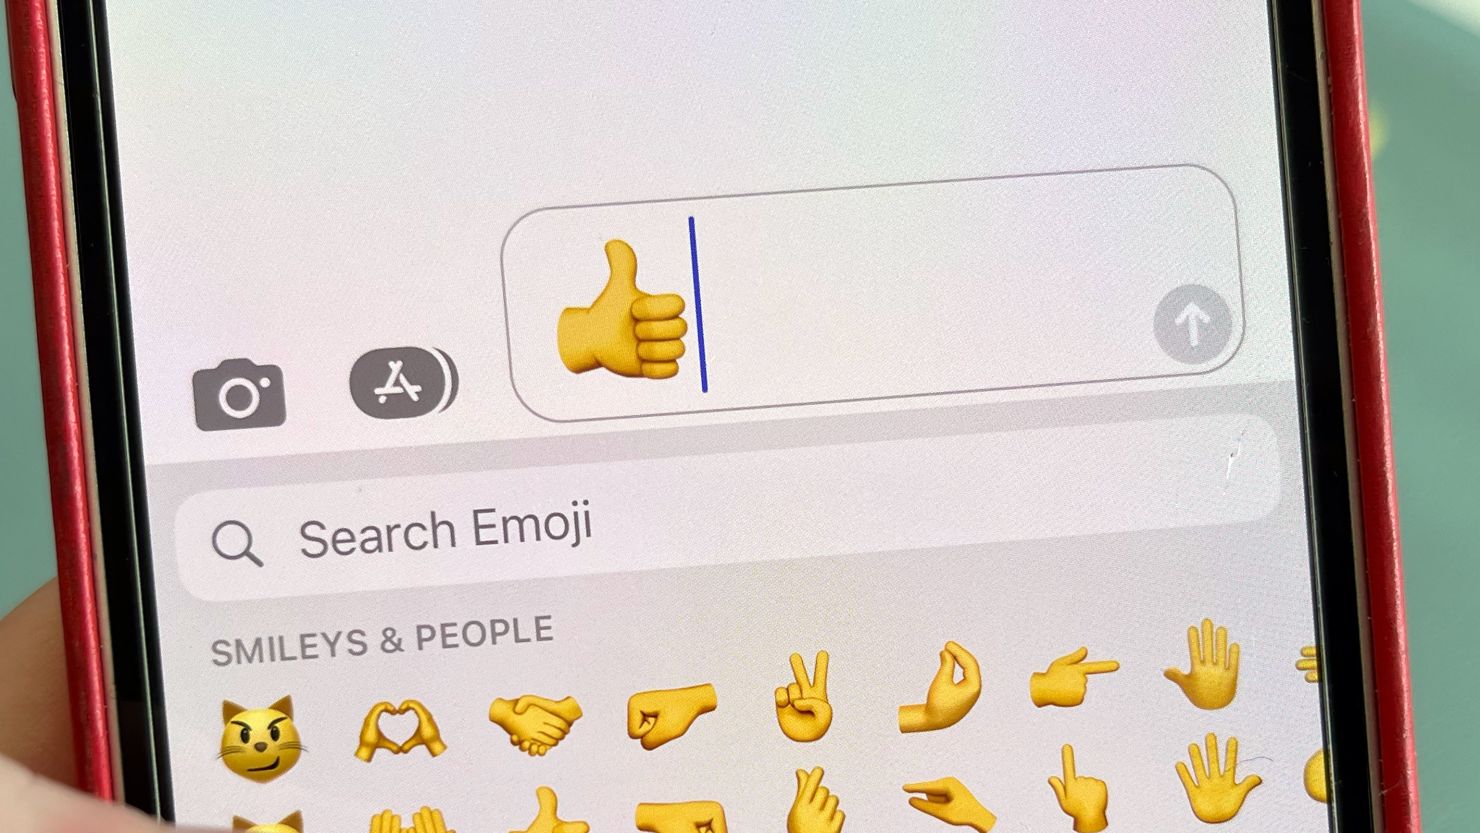 The "thumbs up" emoji.